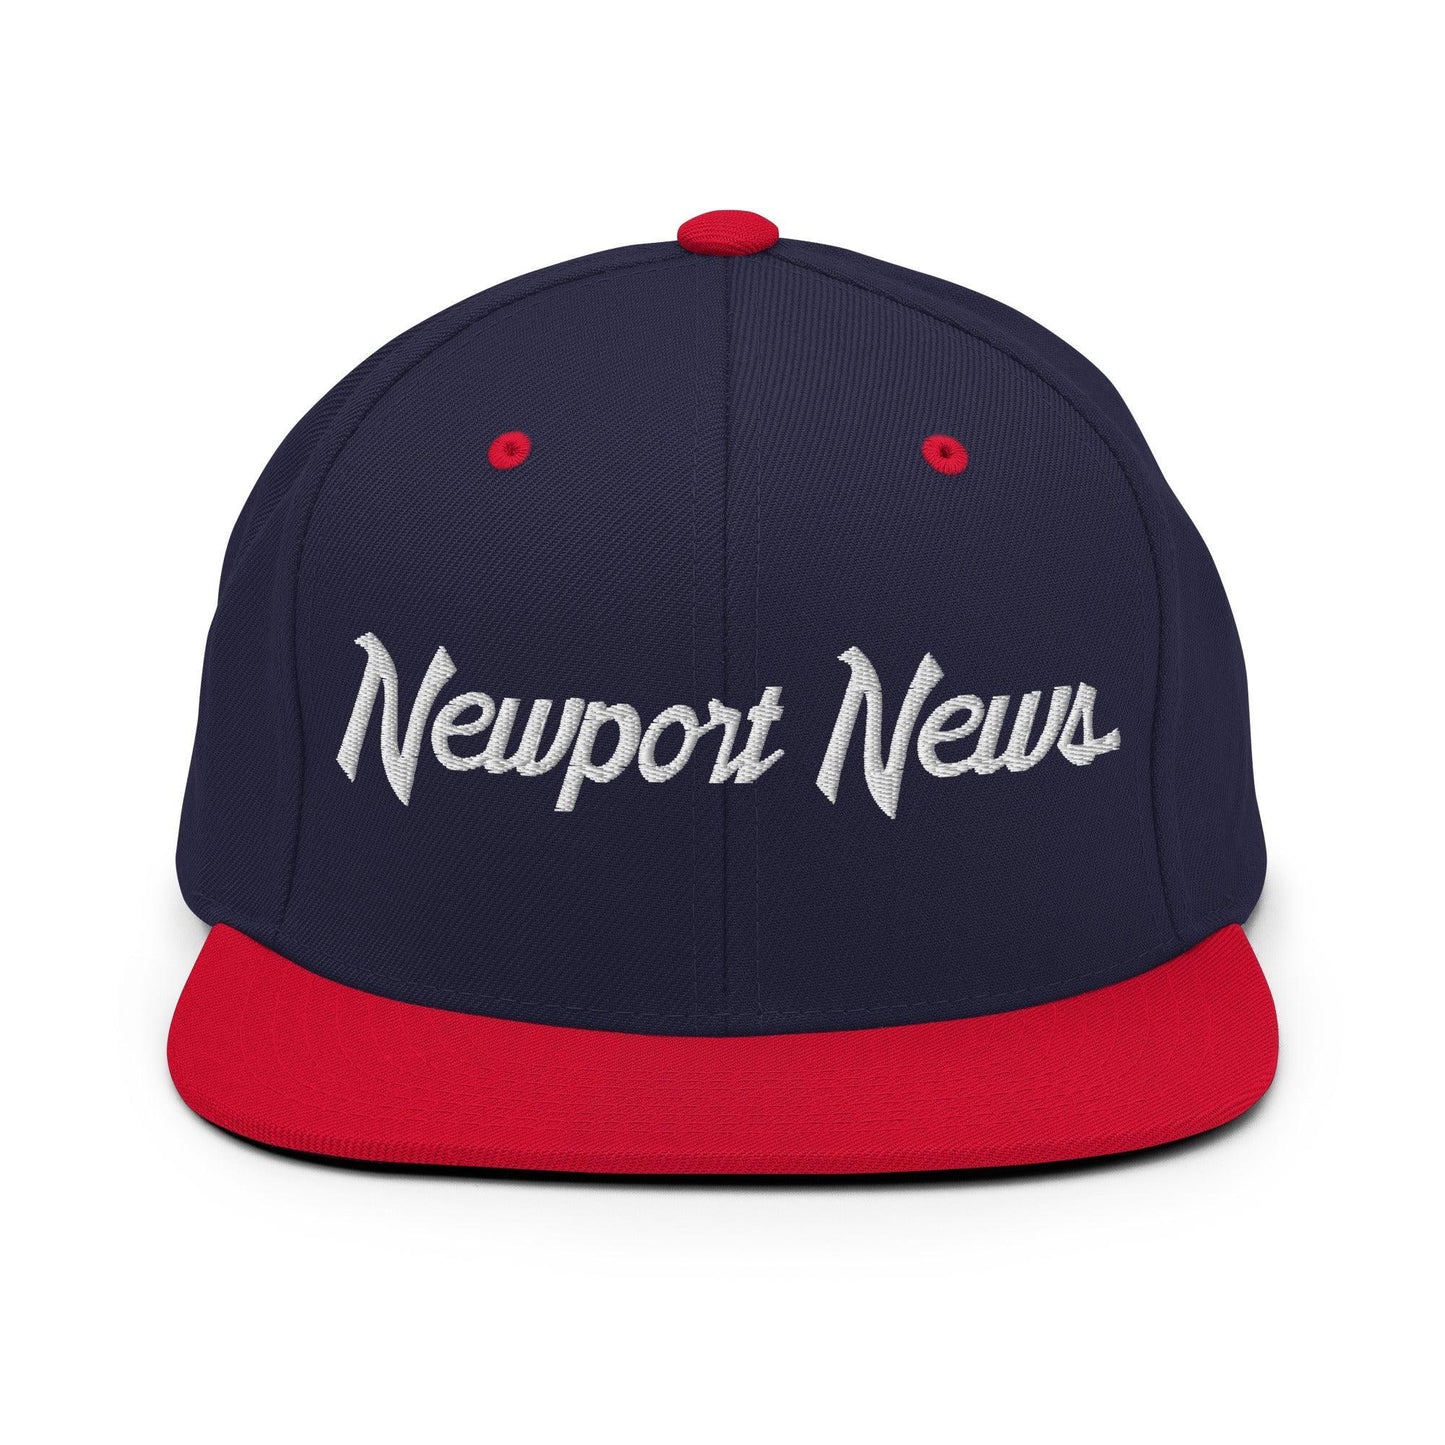 Newport News Script Snapback Hat Navy/ Red